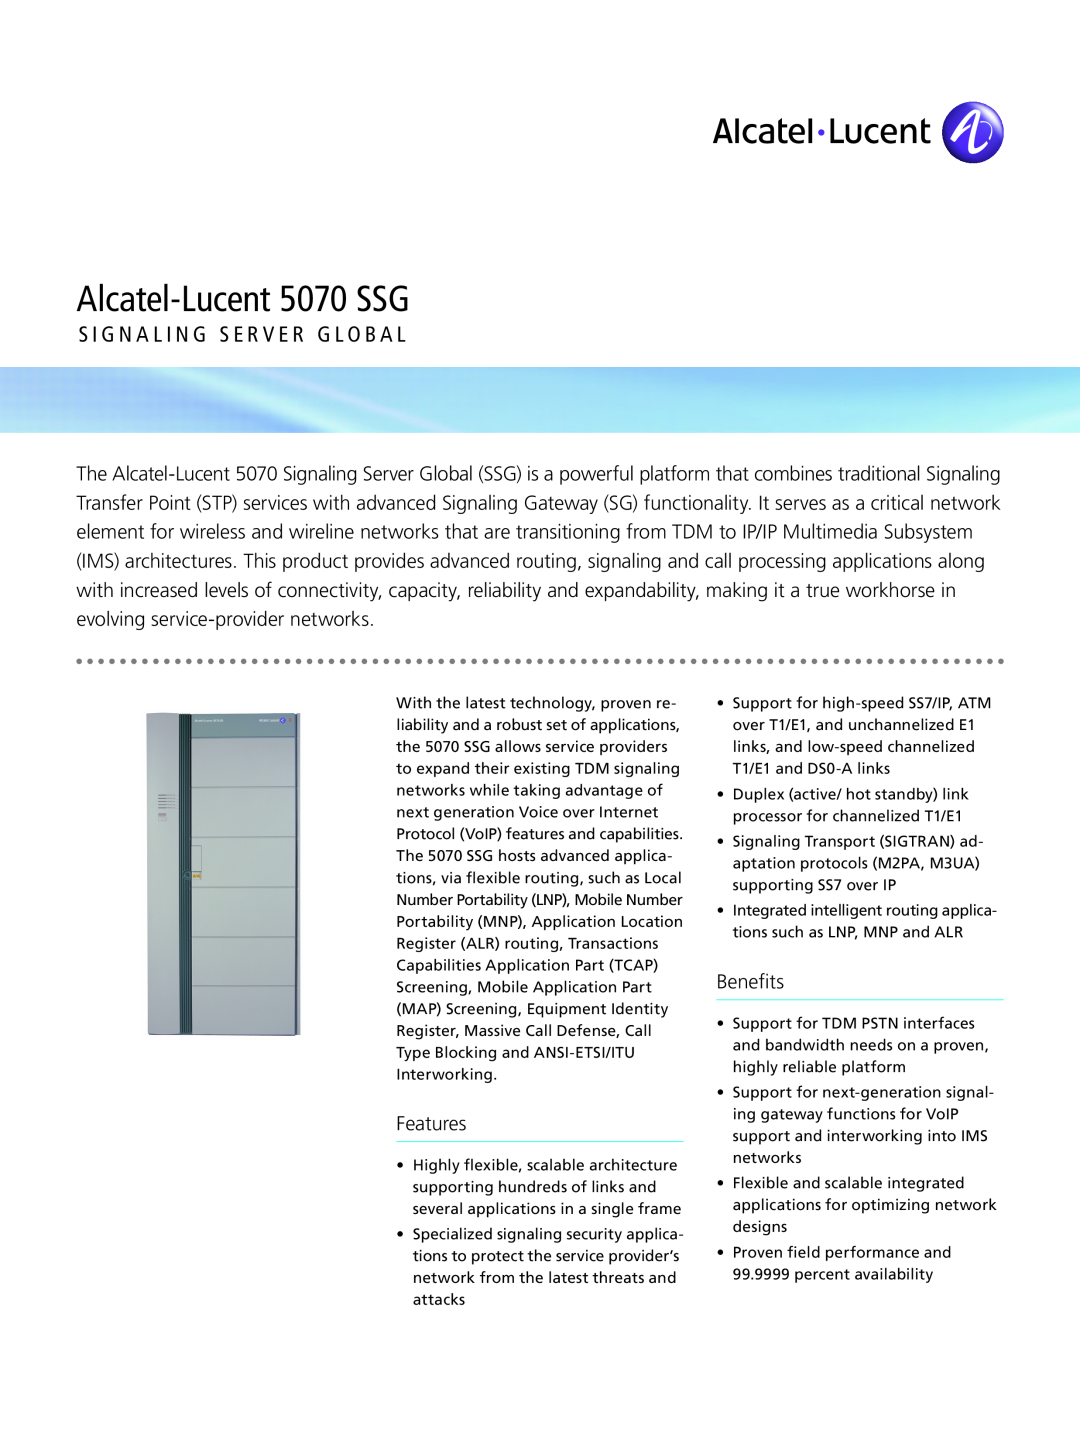 Alcatel-Lucent manual Features, Benefits, Alcatel-Lucent 5070 SSG, S I G N A L I N G S E R V E R G L O B A L 